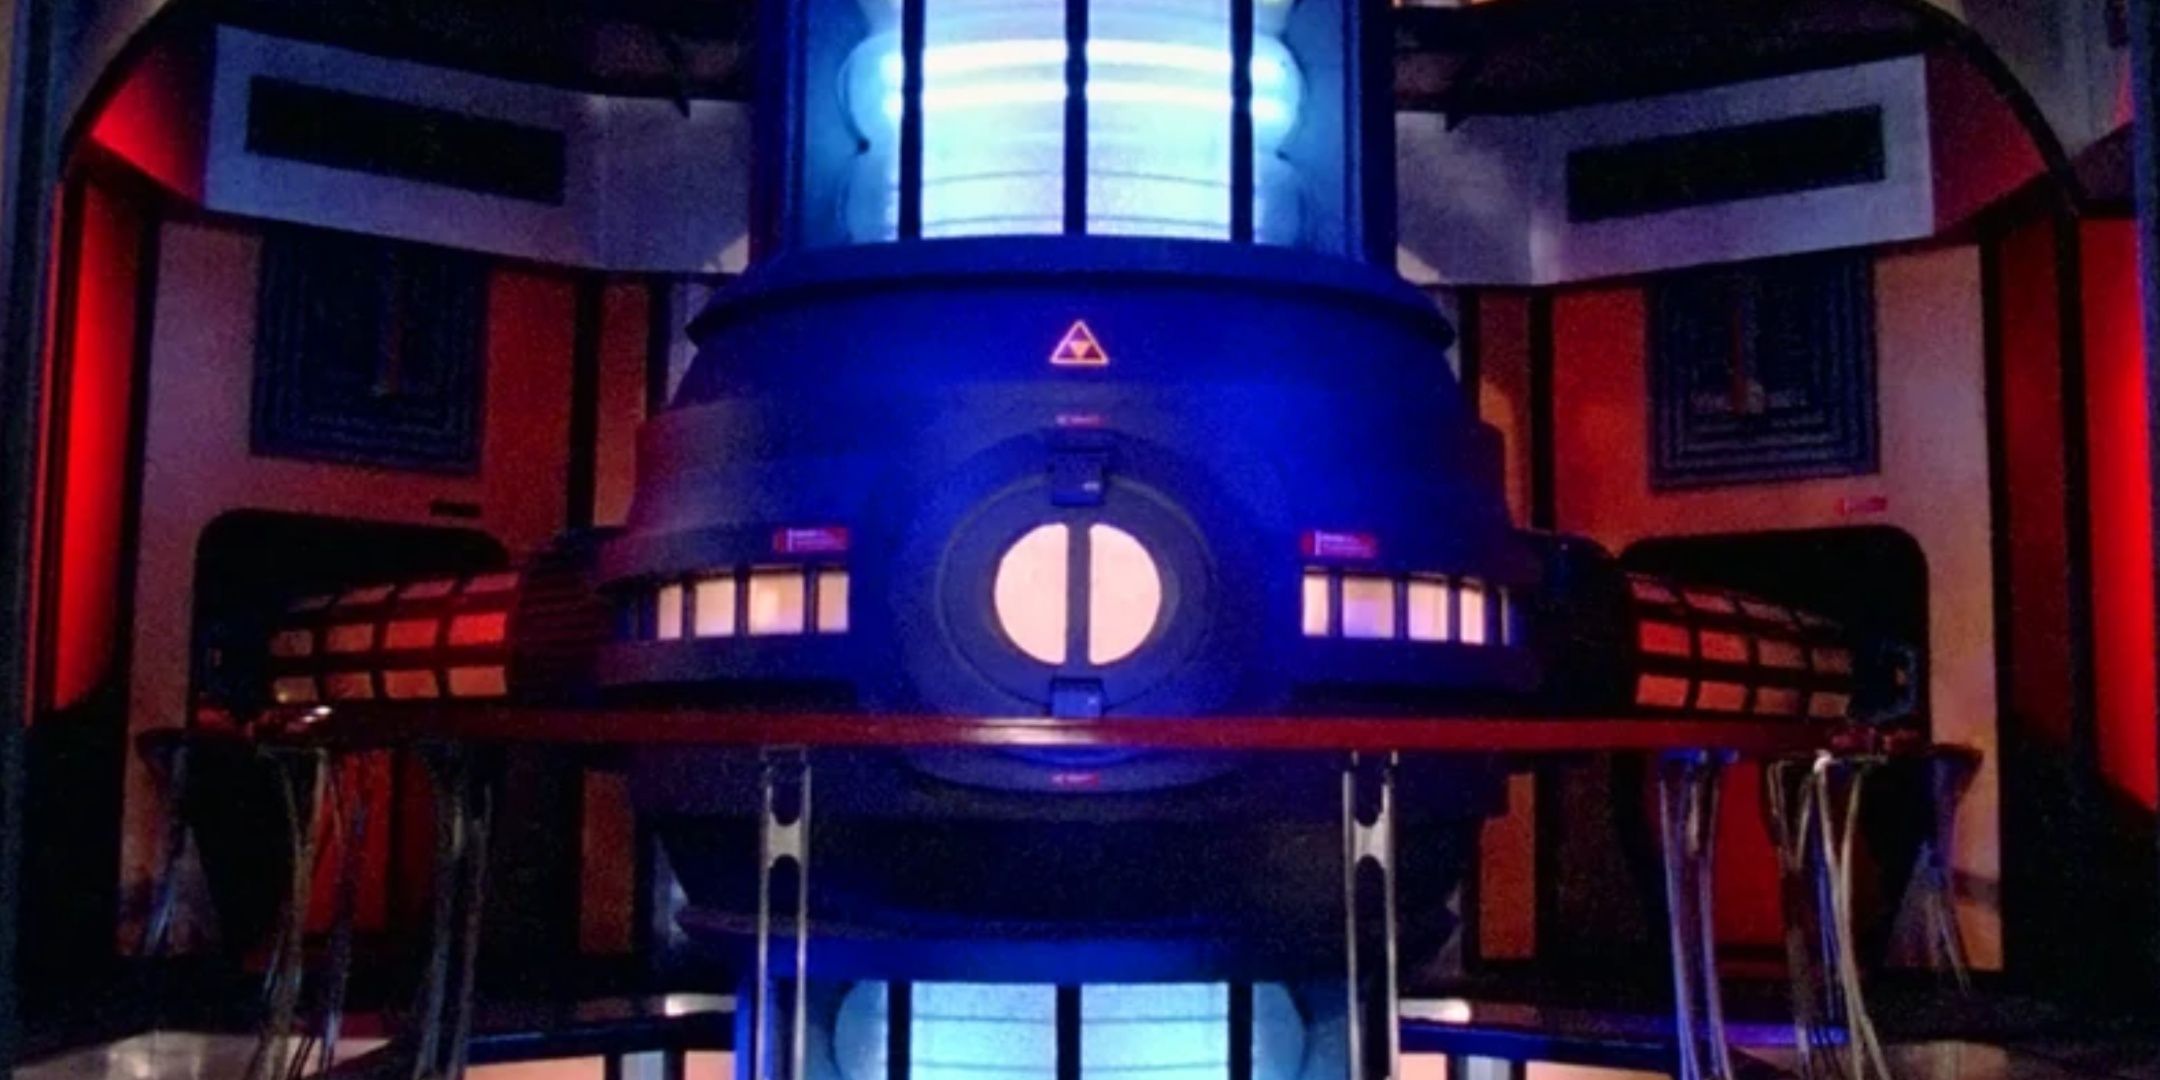 A warp core engine depicted in Star Trek.